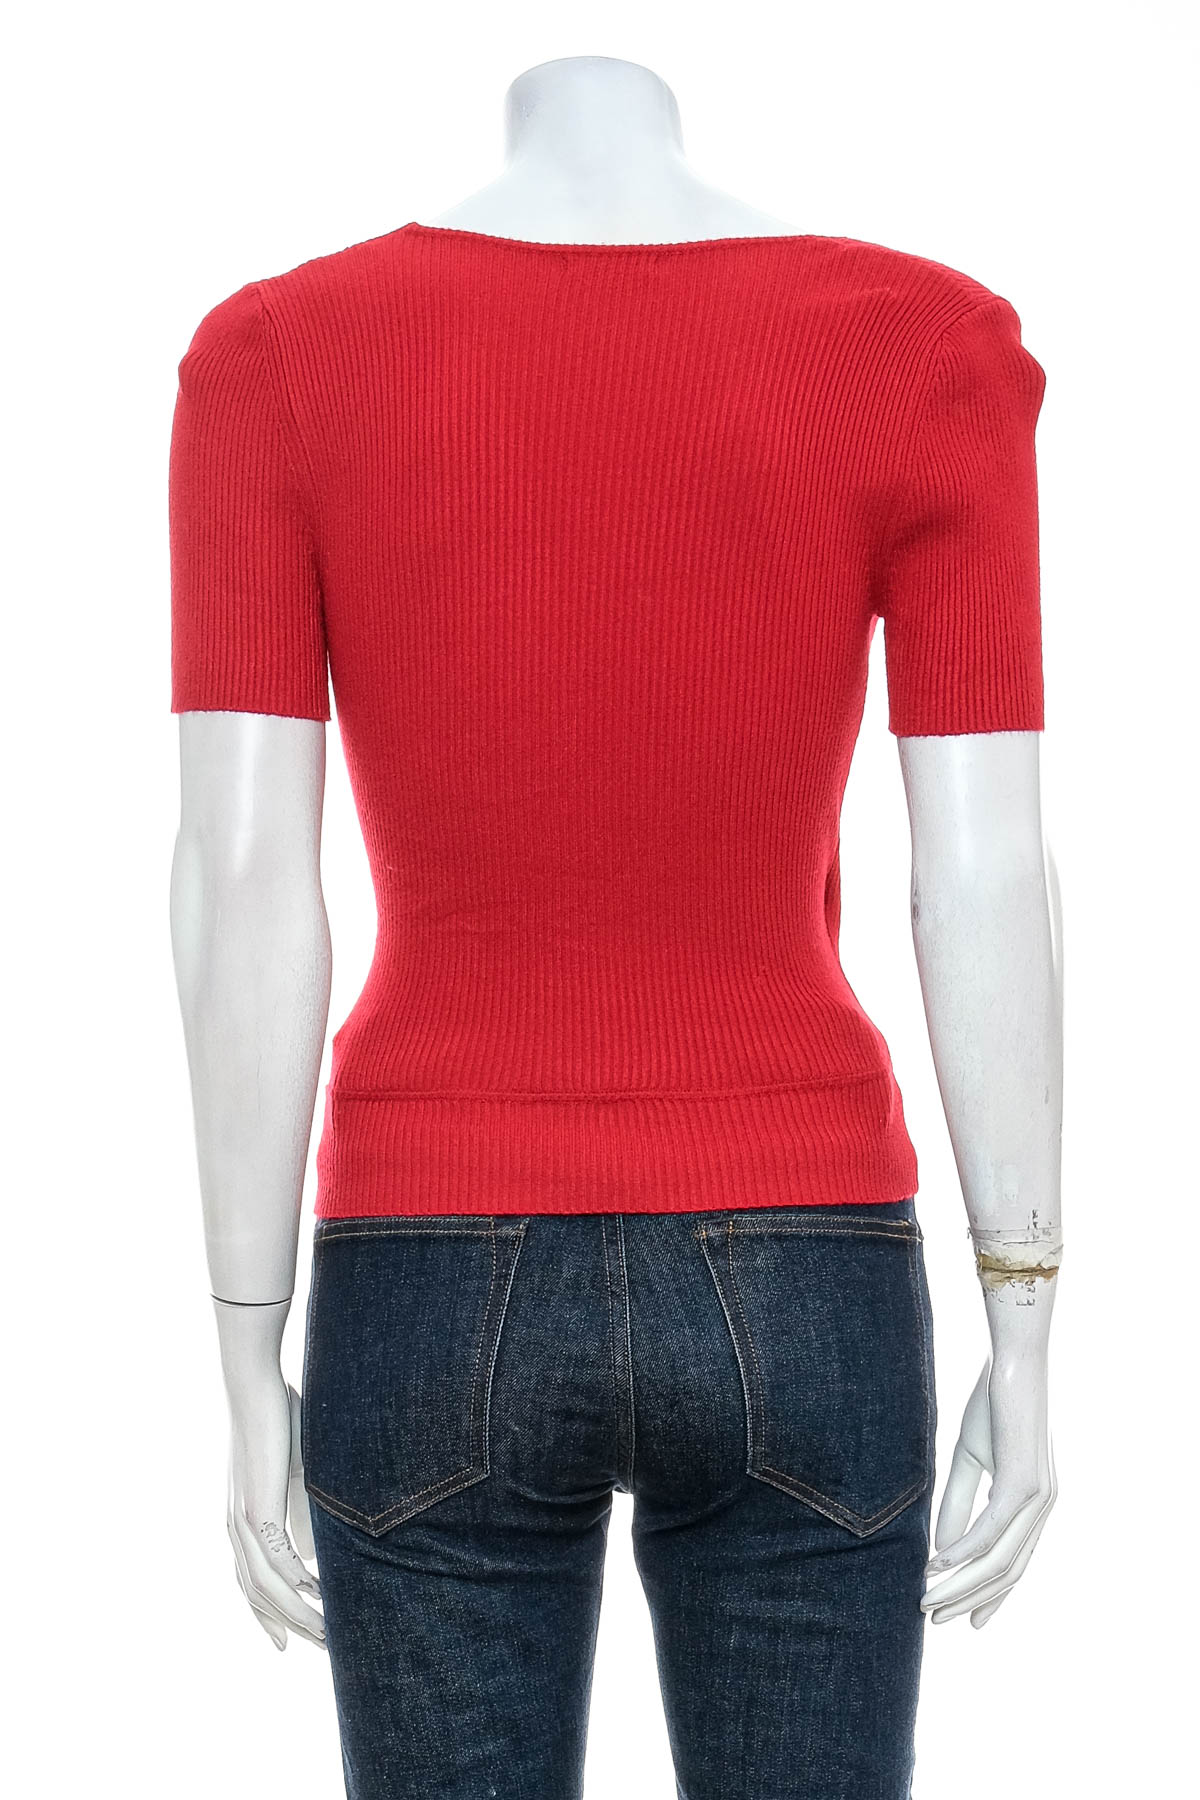 Women's sweater - Portmans - 1